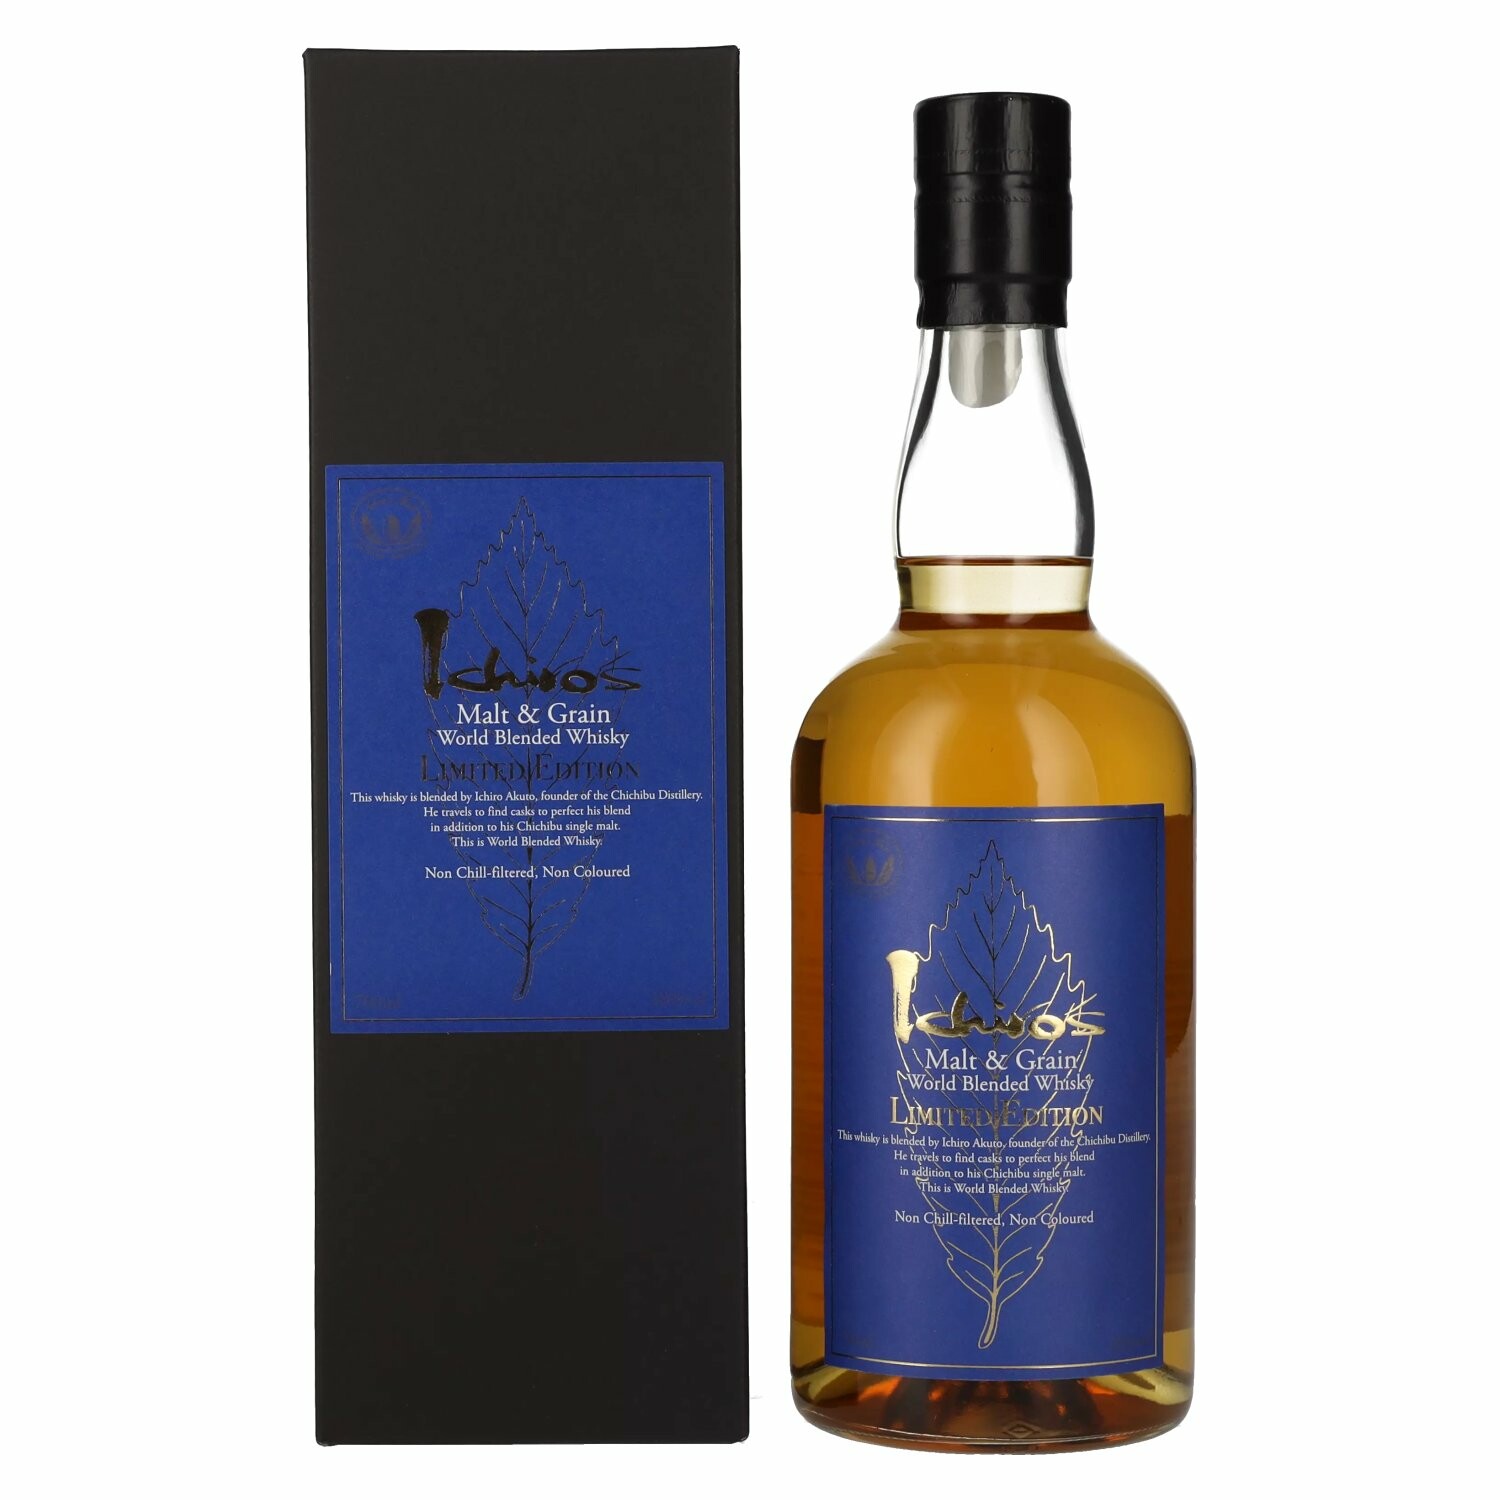 Chichibu Ichiro's Malt & Grain World Blended Whisky 48% Vol. 0,7l in Giftbox